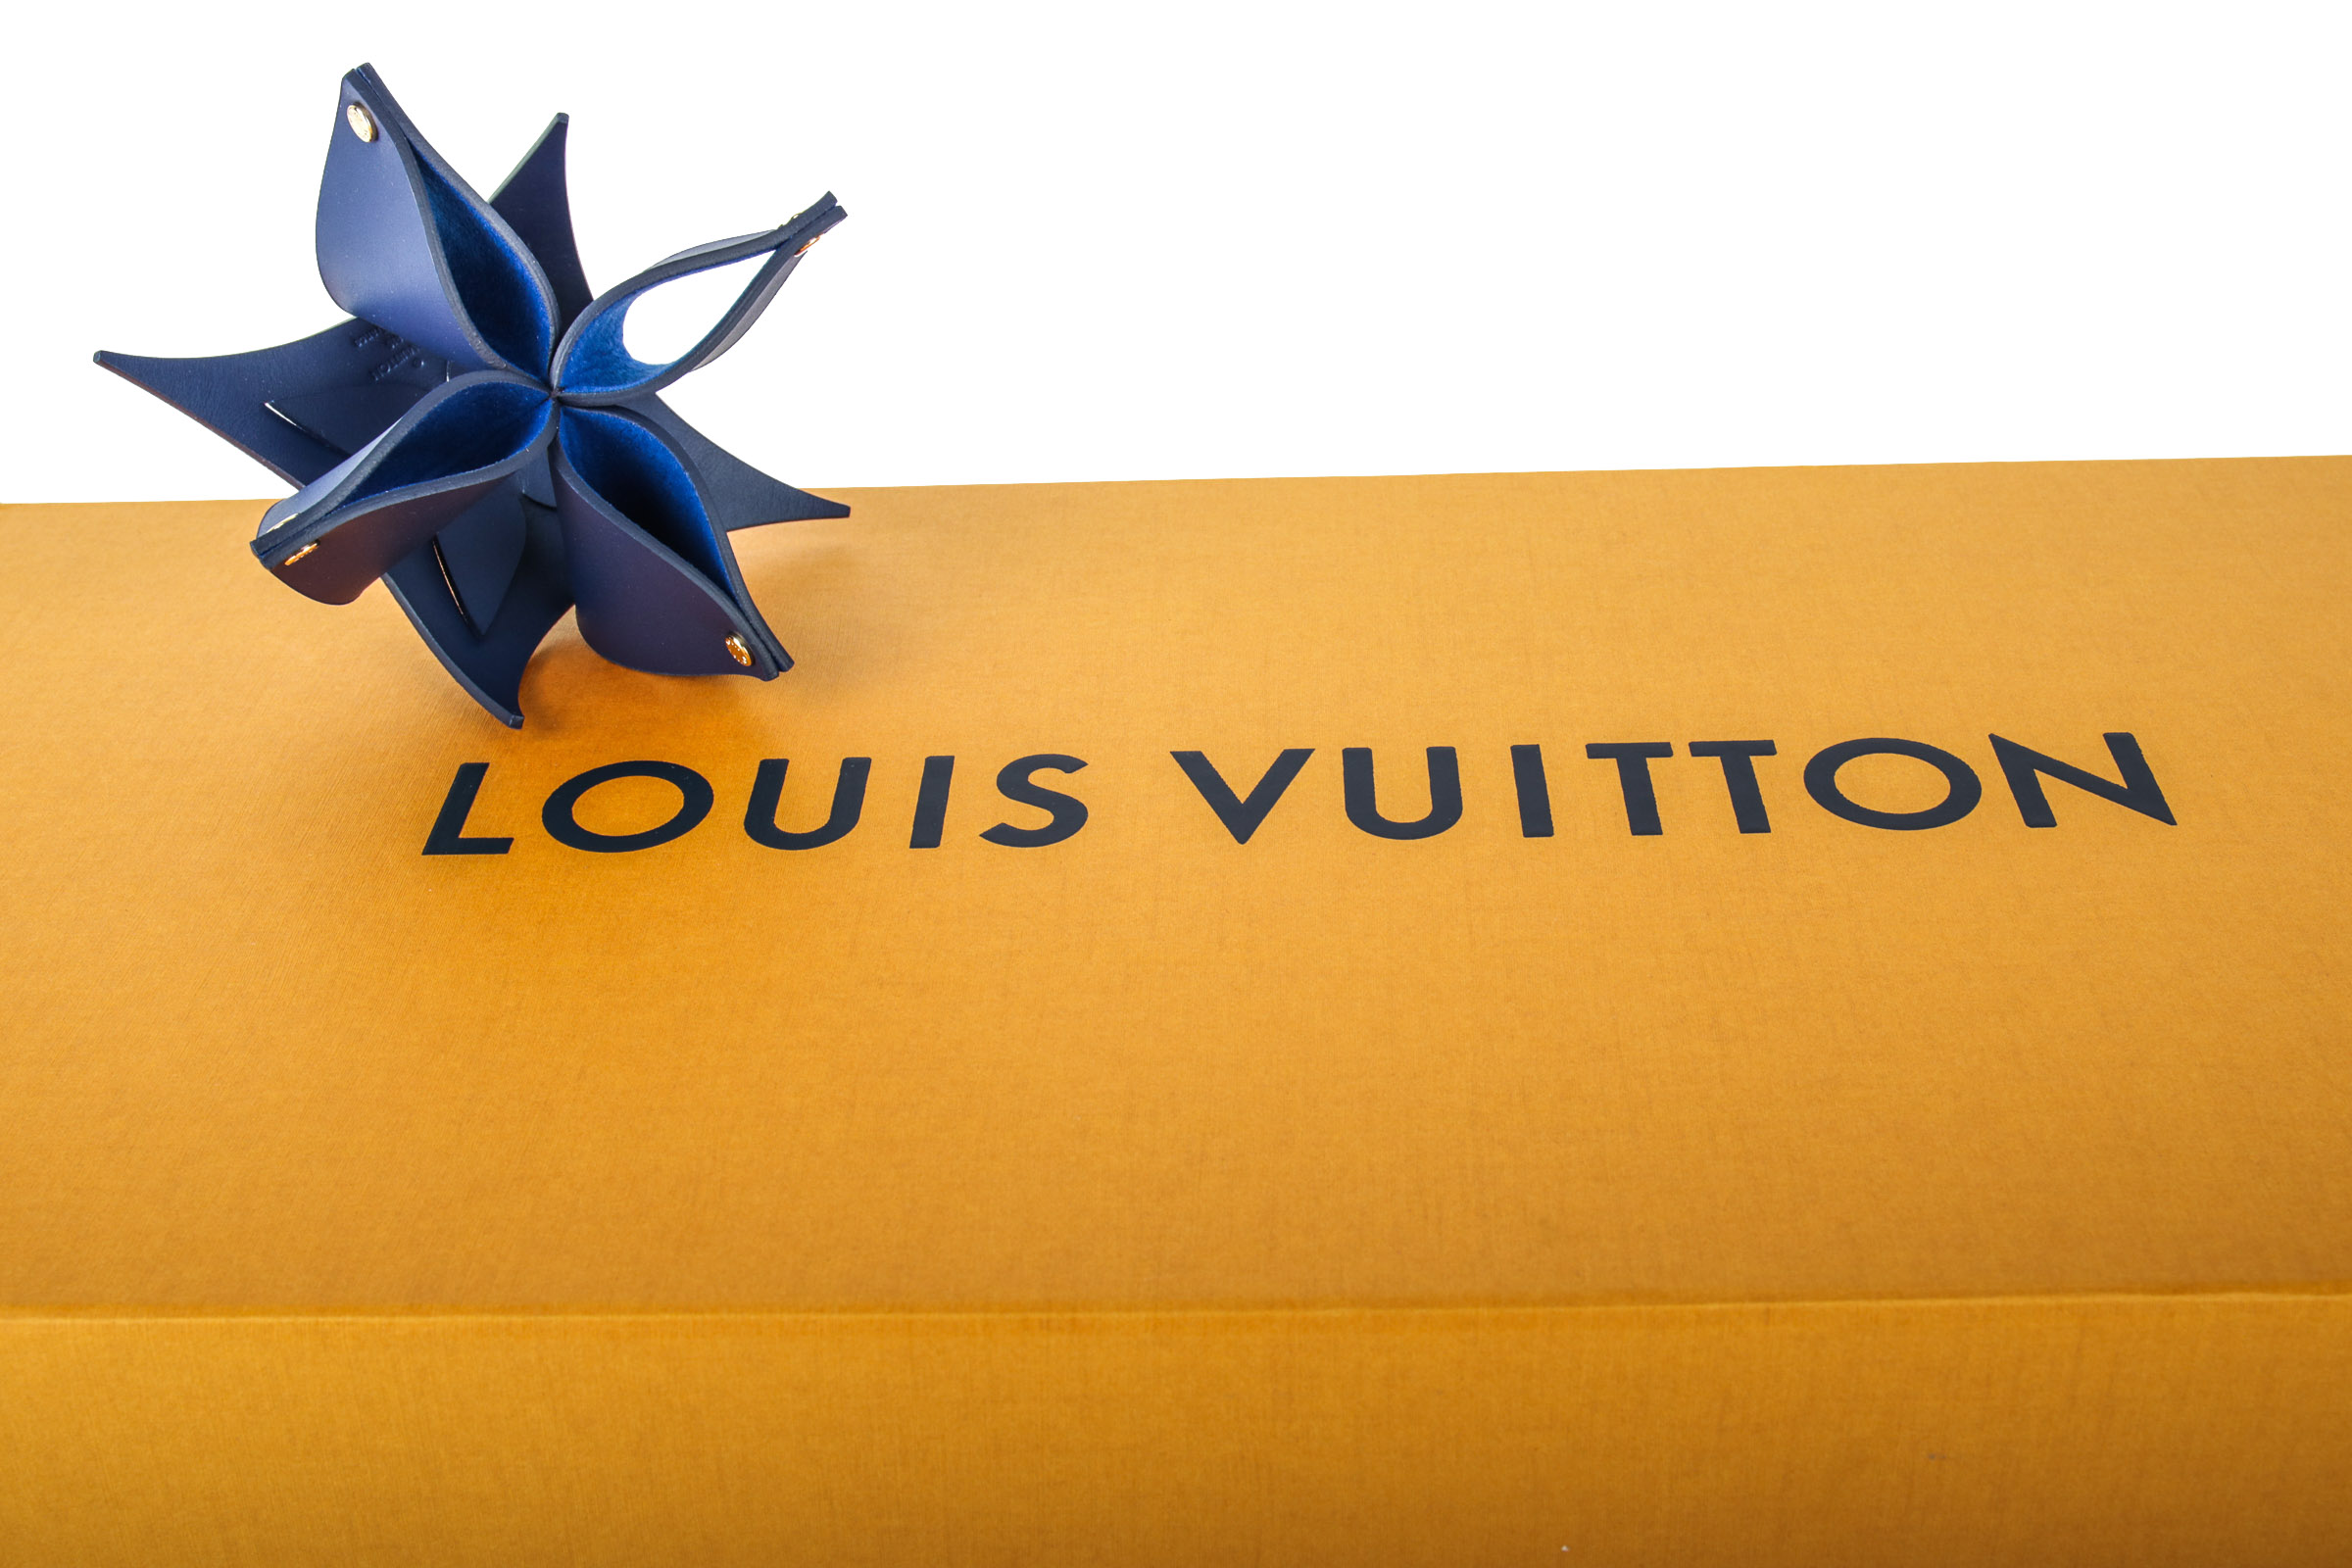 Louis Vuitton Blue Objet Nomades Origami Flower by Atelier Oi 371lvs22 –  Bagriculture